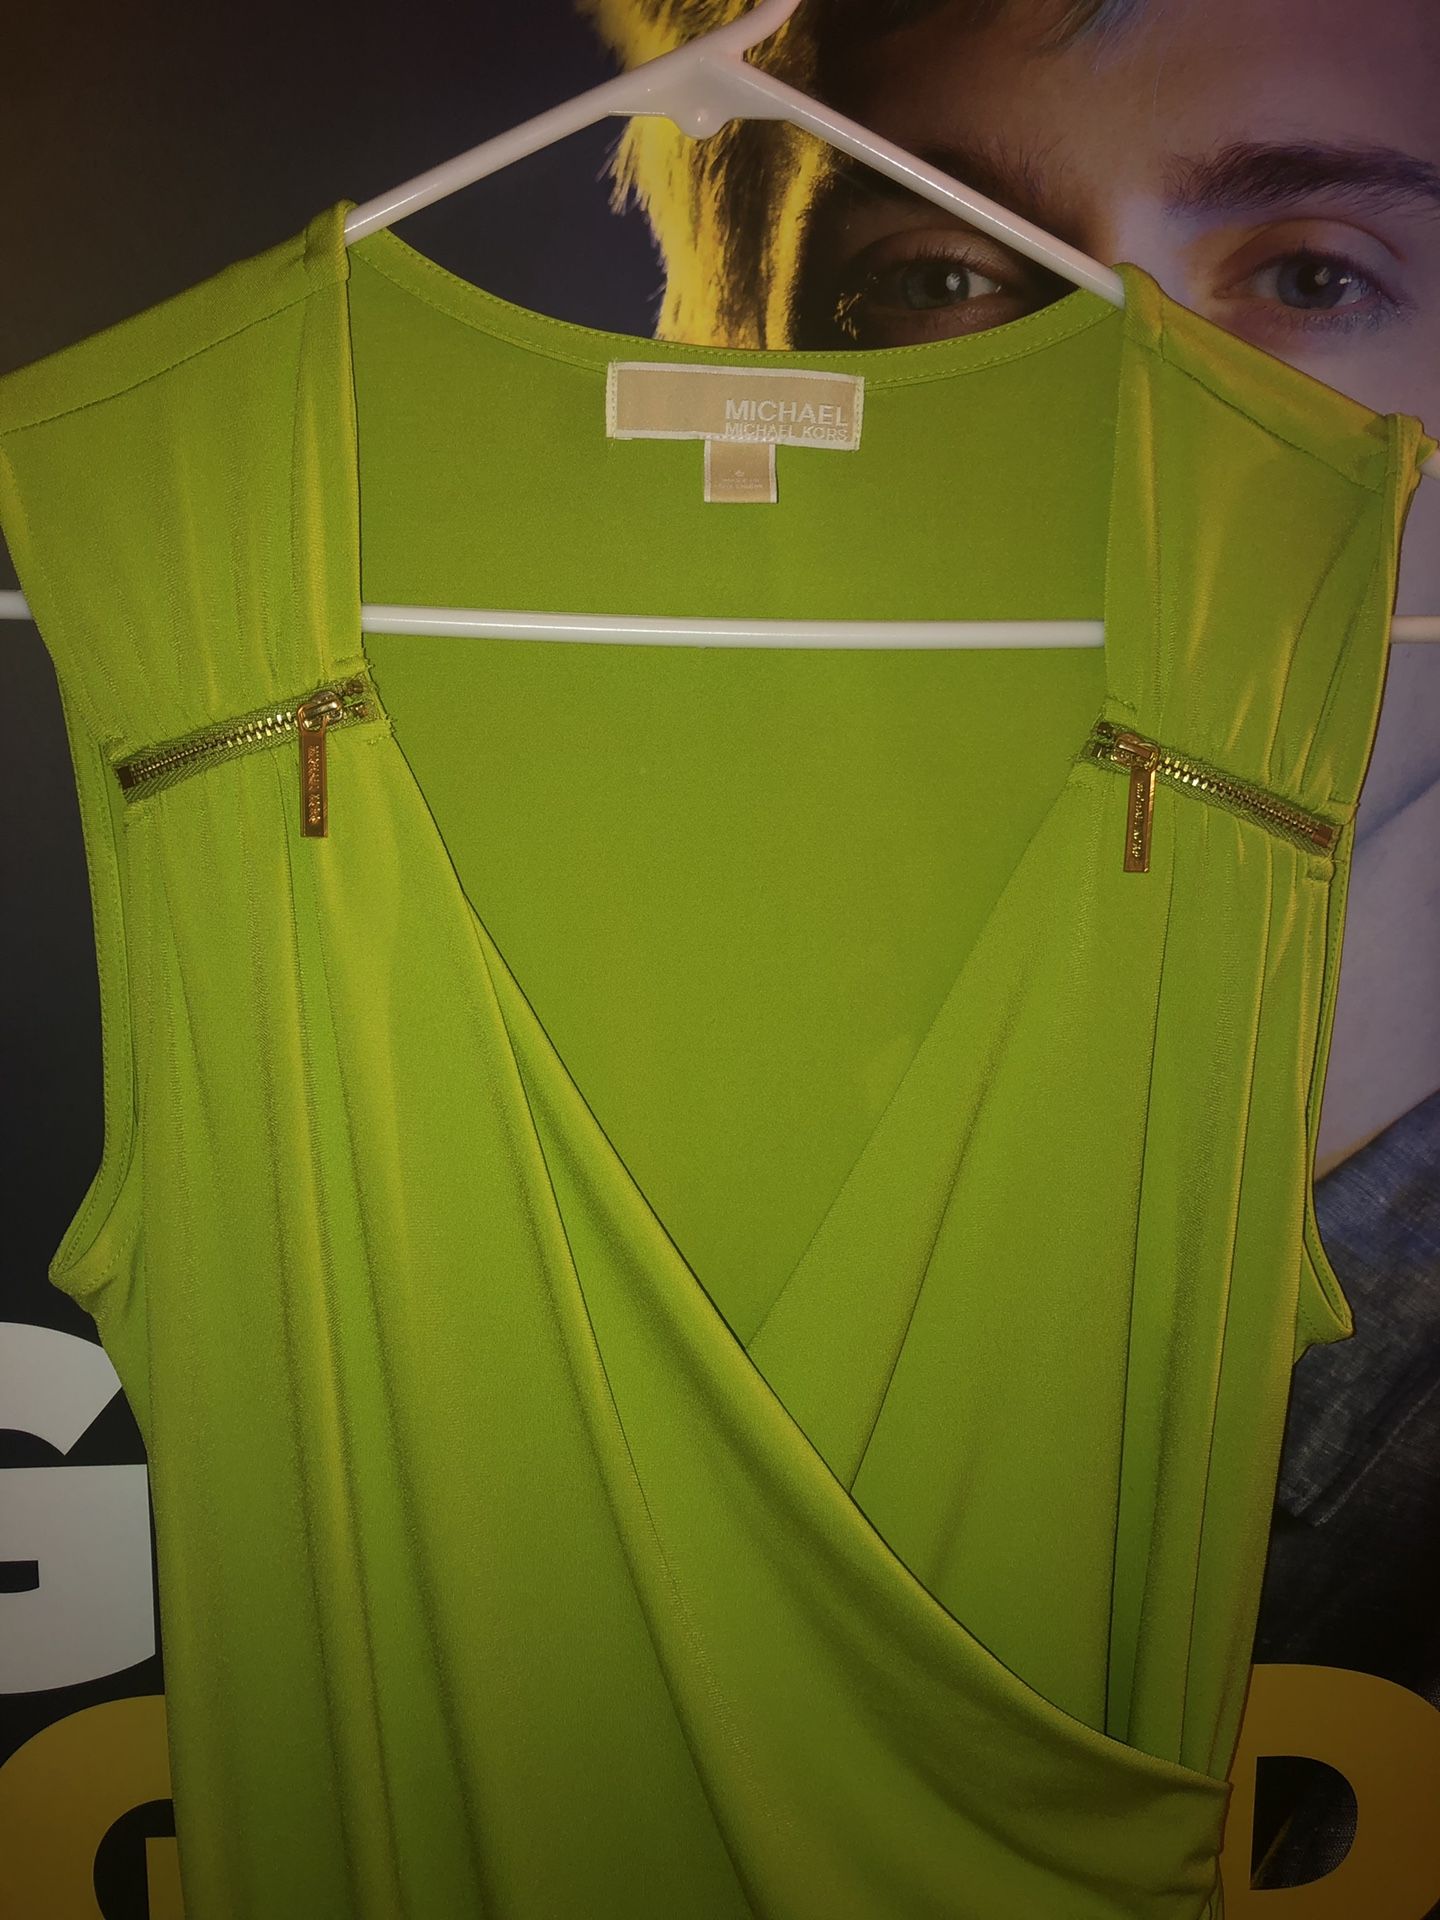 Michael Kors Dress Size 6 , lime green color